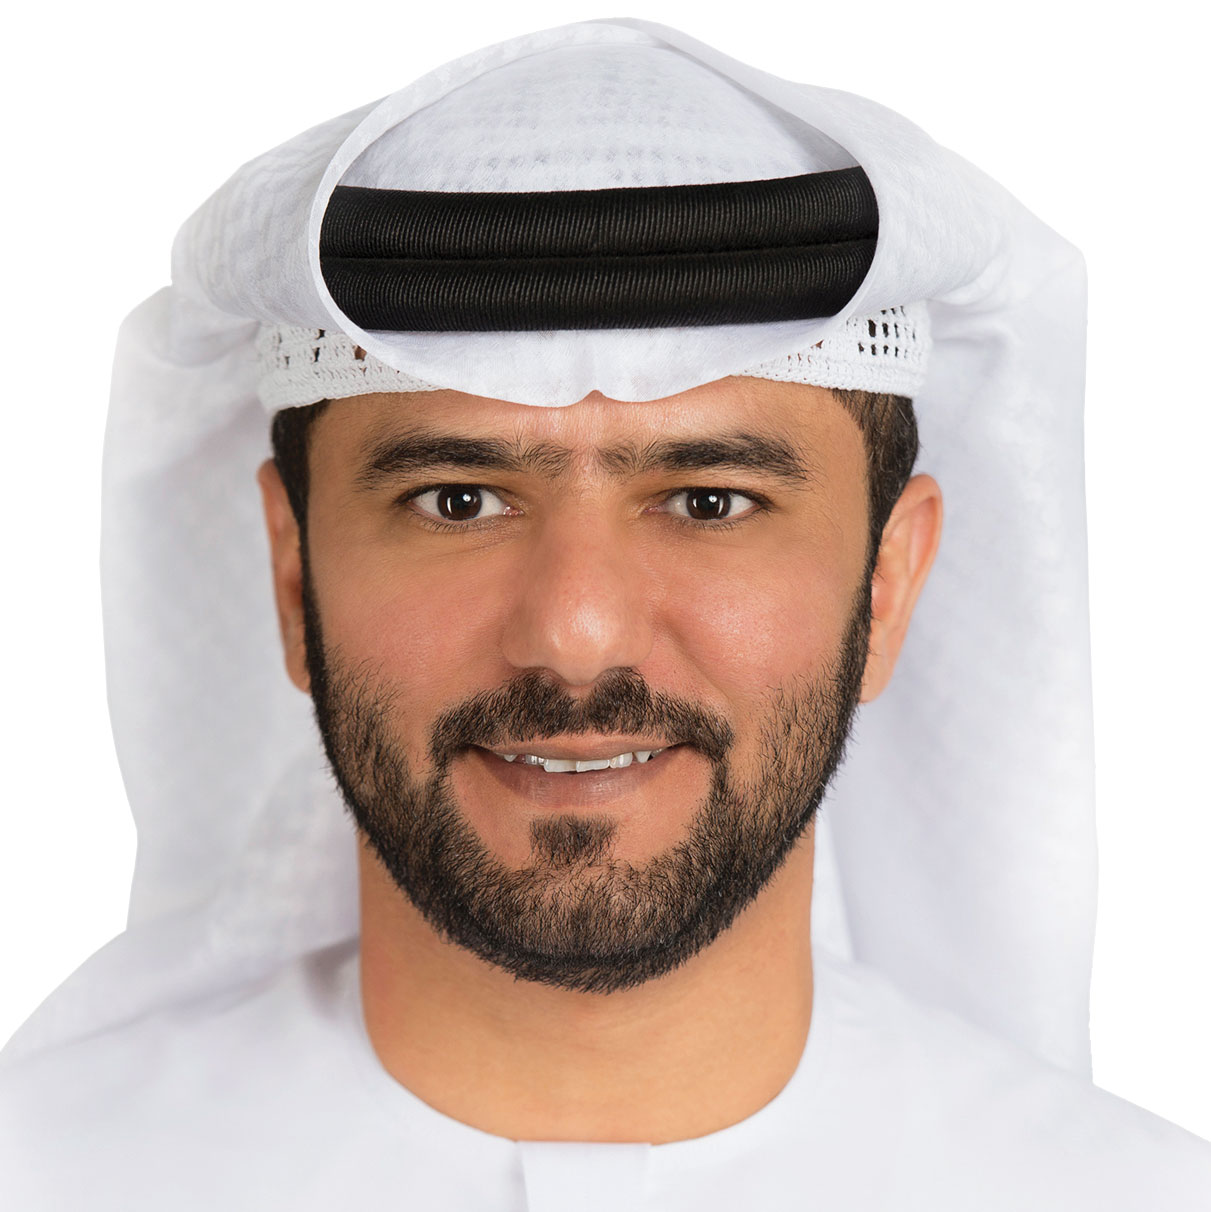 eBlue_economy_Captain Mohamed Juma Al Shamisi, Managing Director & Group CEO, AD Ports Grou